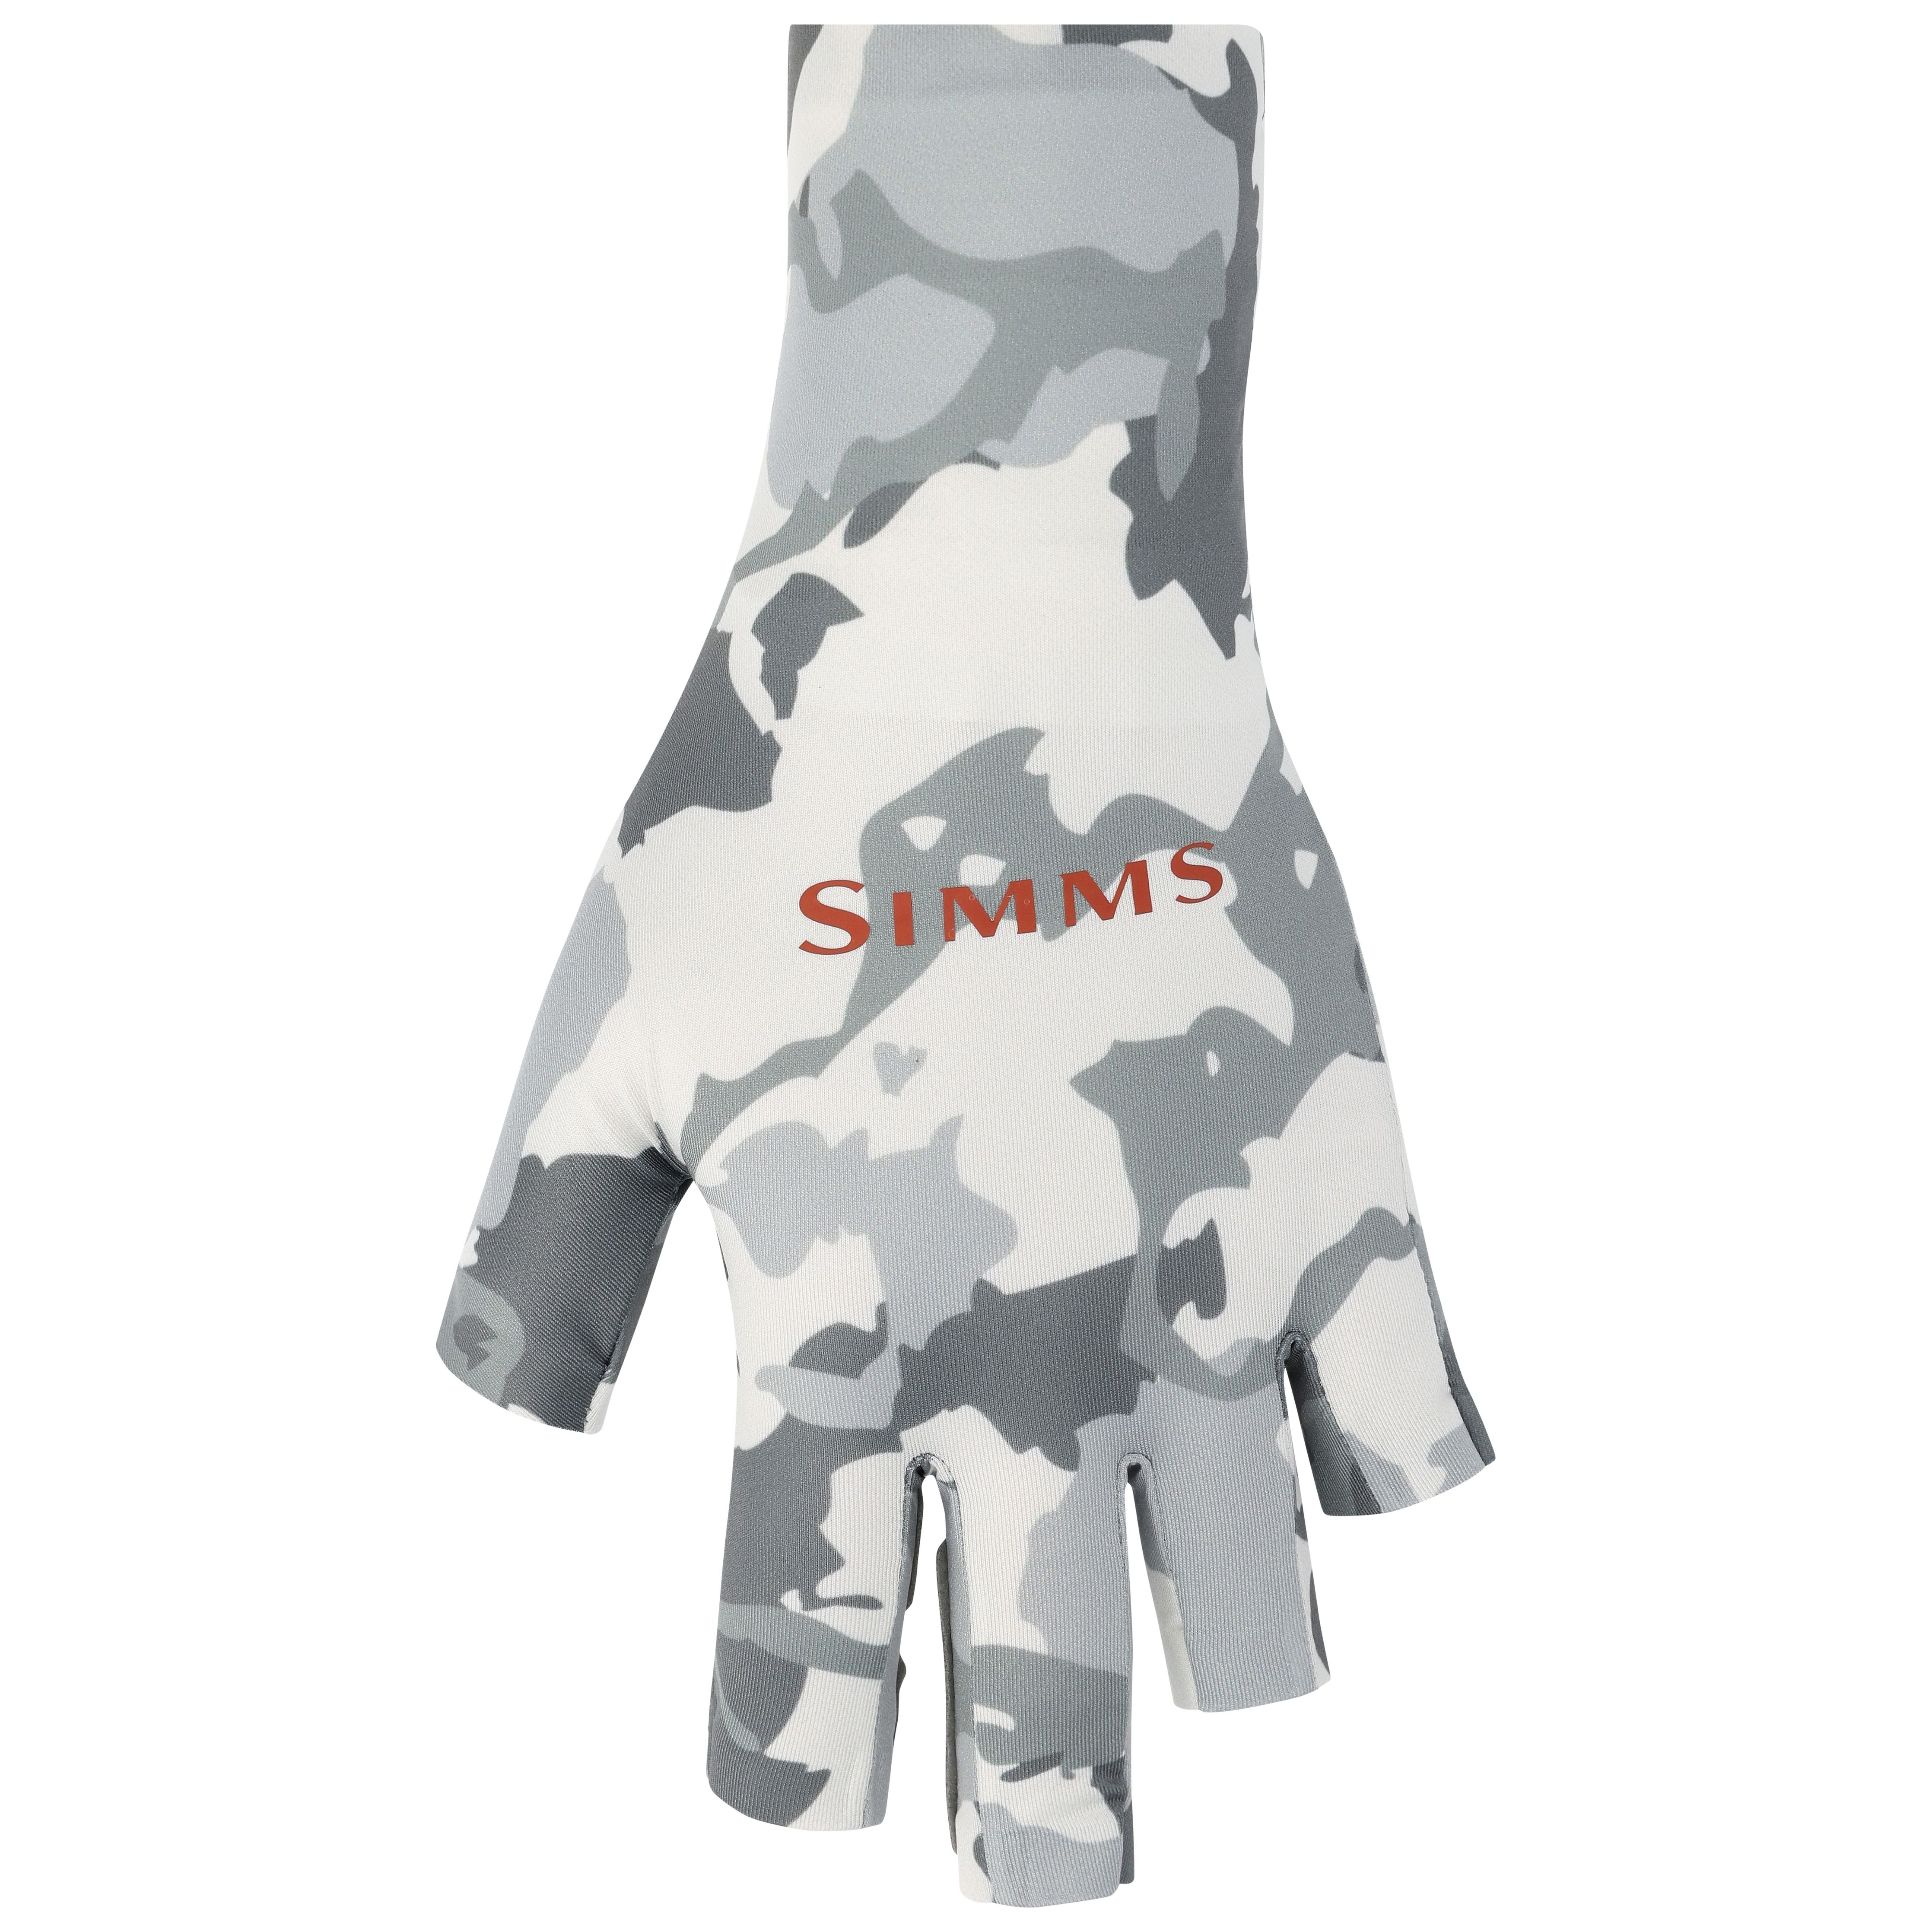 Simms SolarFlex SunGlove Regiment Camo Cinder Image 01